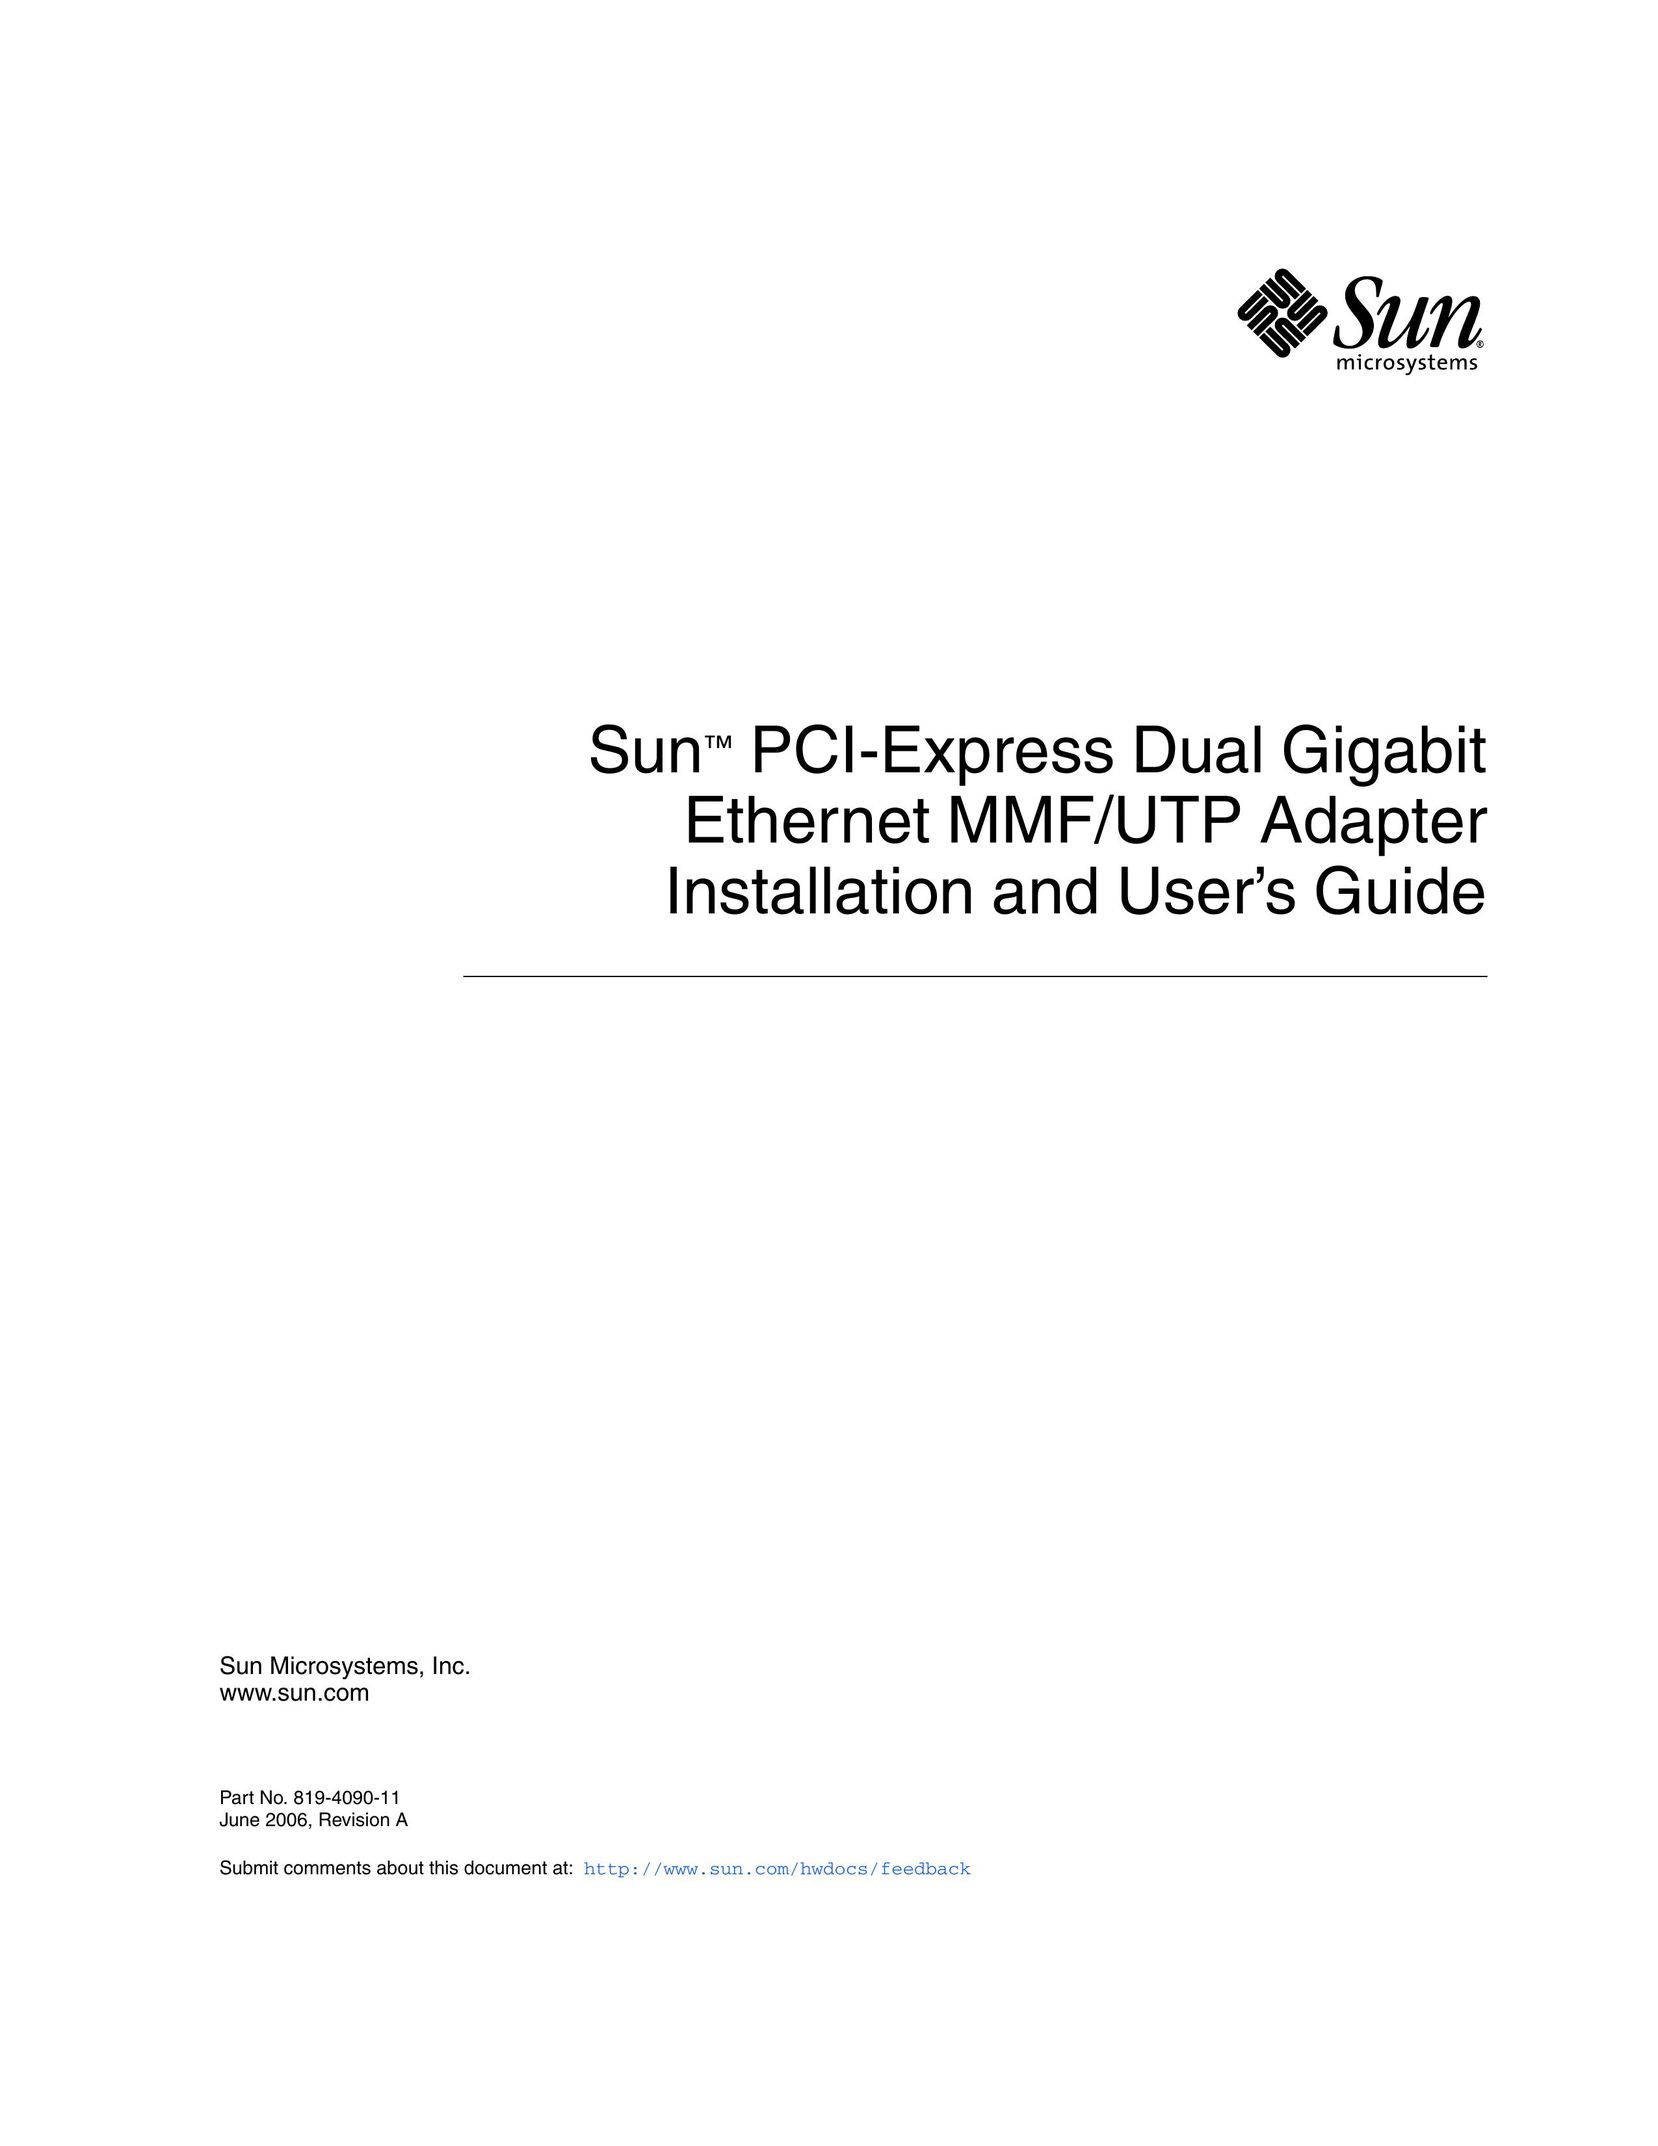 Sun Microsystems Gigabit Ethernet MMF/UTP Adapter Network Card User Manual